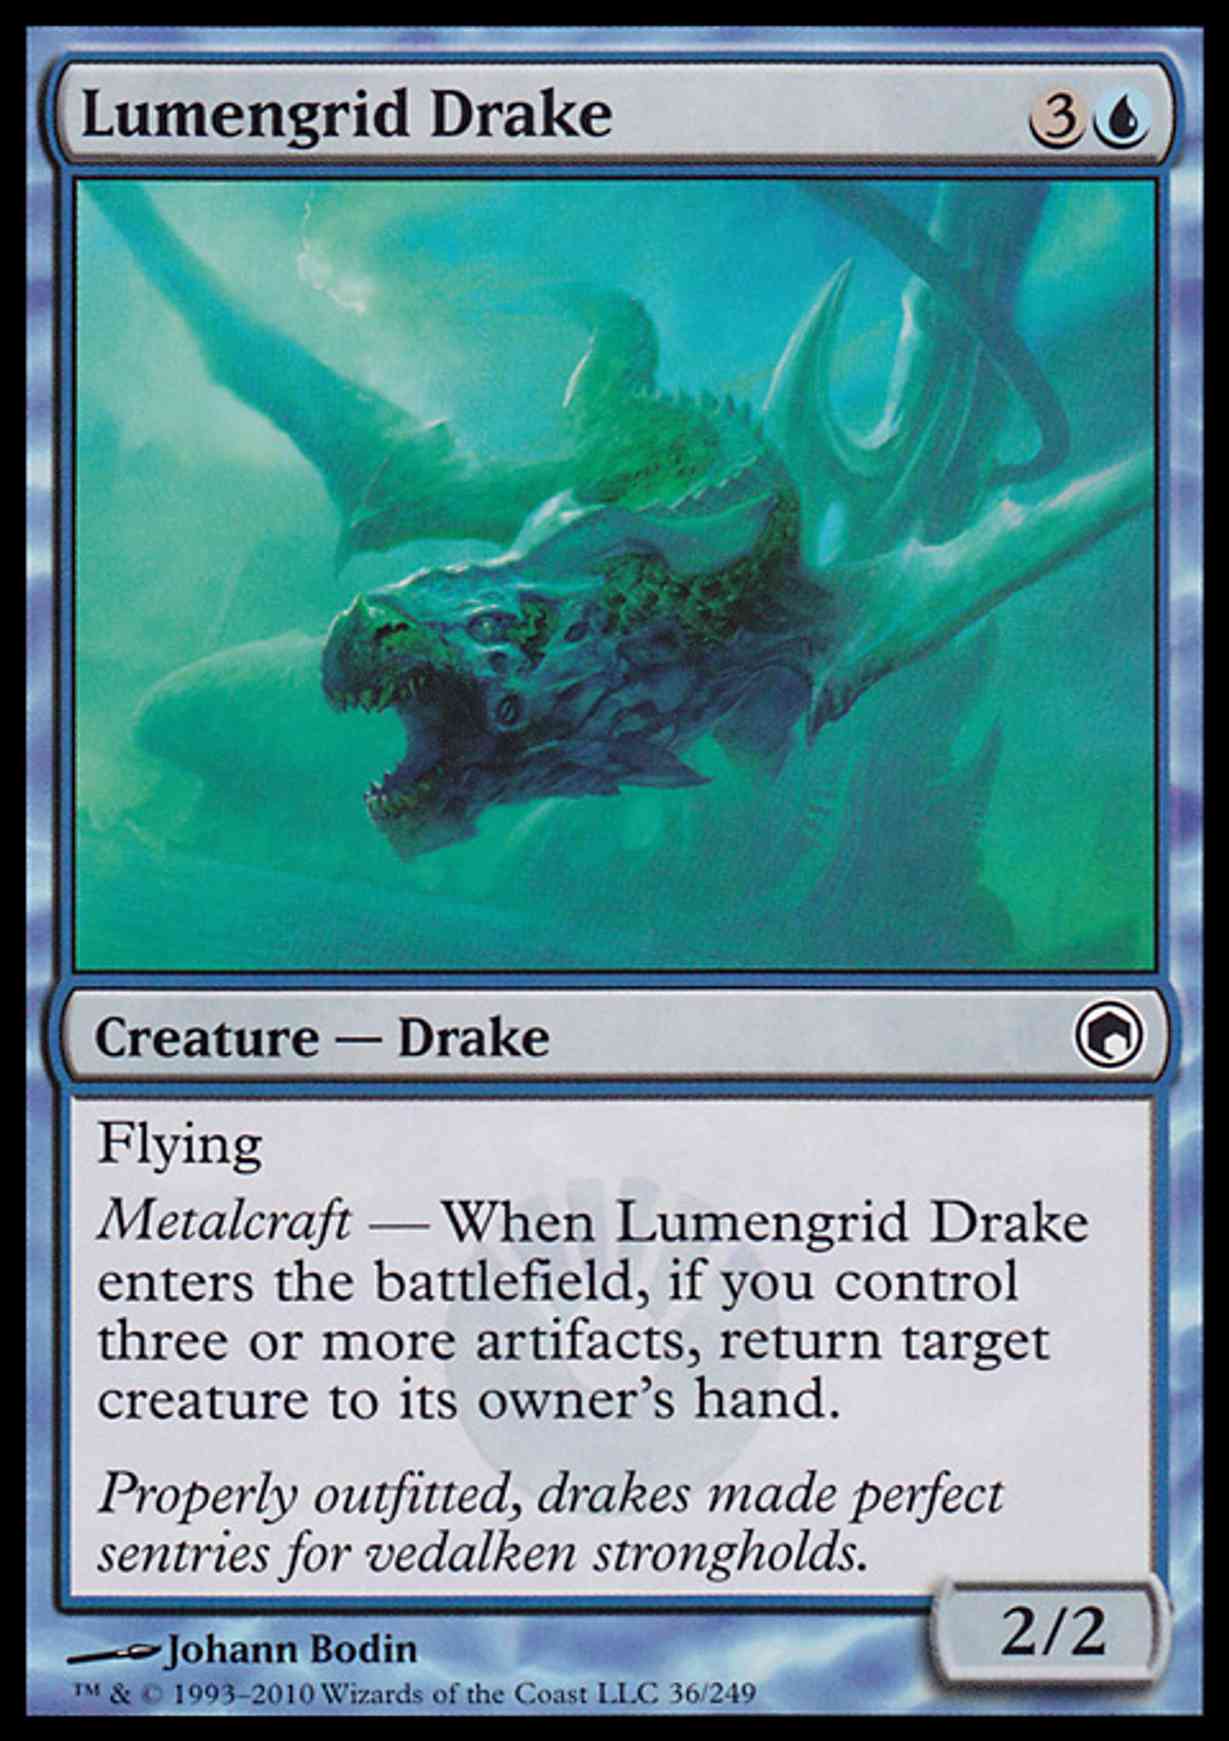 Lumengrid Drake magic card front